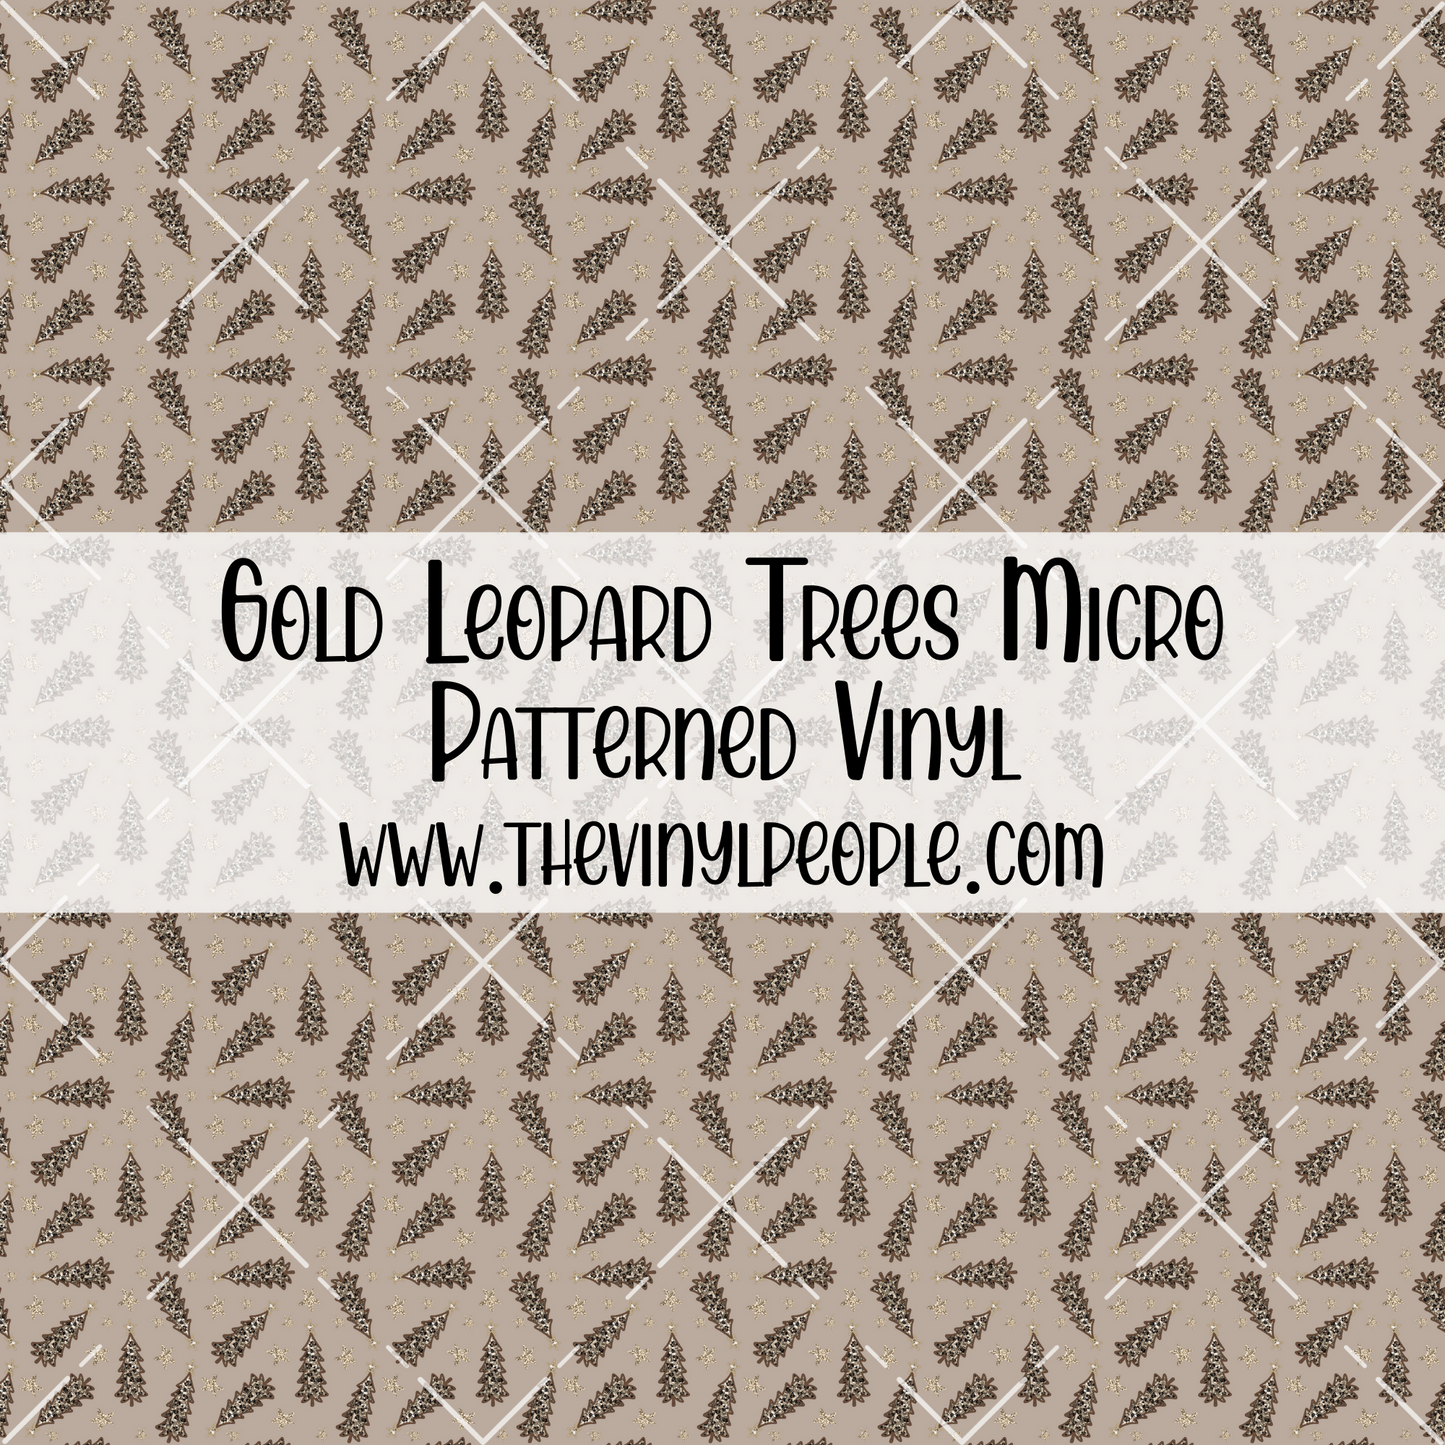 Gold Leopard Trees Patterned Vinyl